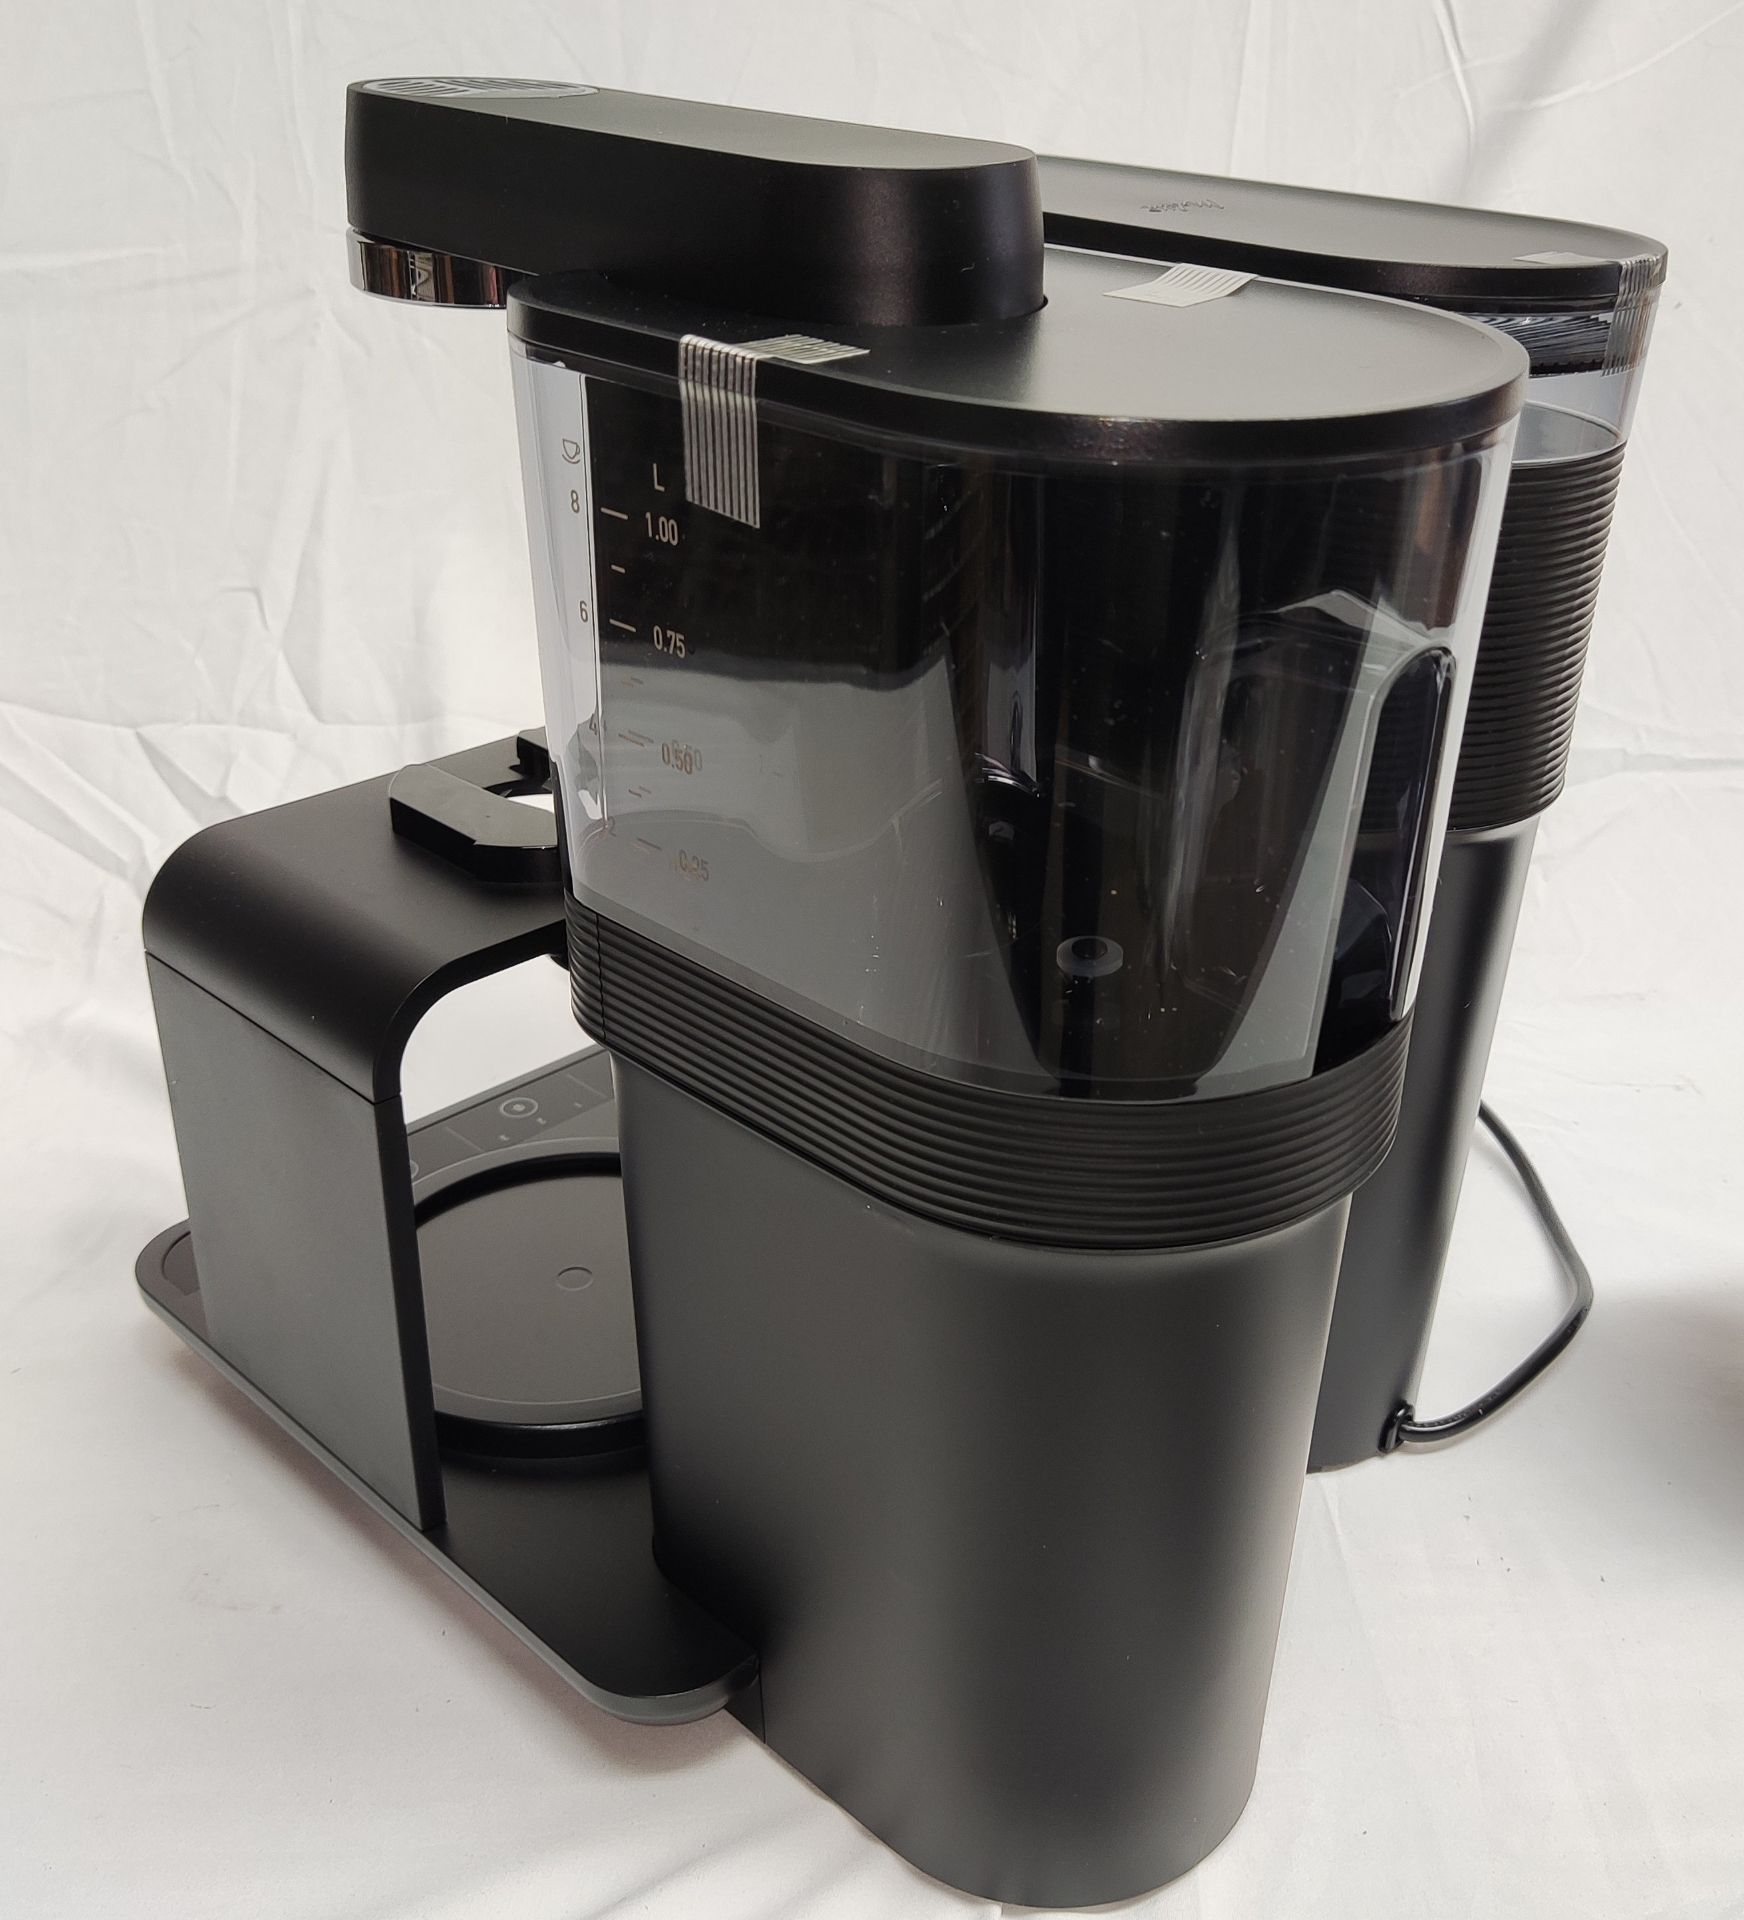 1 x MELITTA Epos Coffee Machine With Grinder - Boxed - Original RRP £399 - Ref: 7129012/HJL350/C19/ - Image 2 of 14